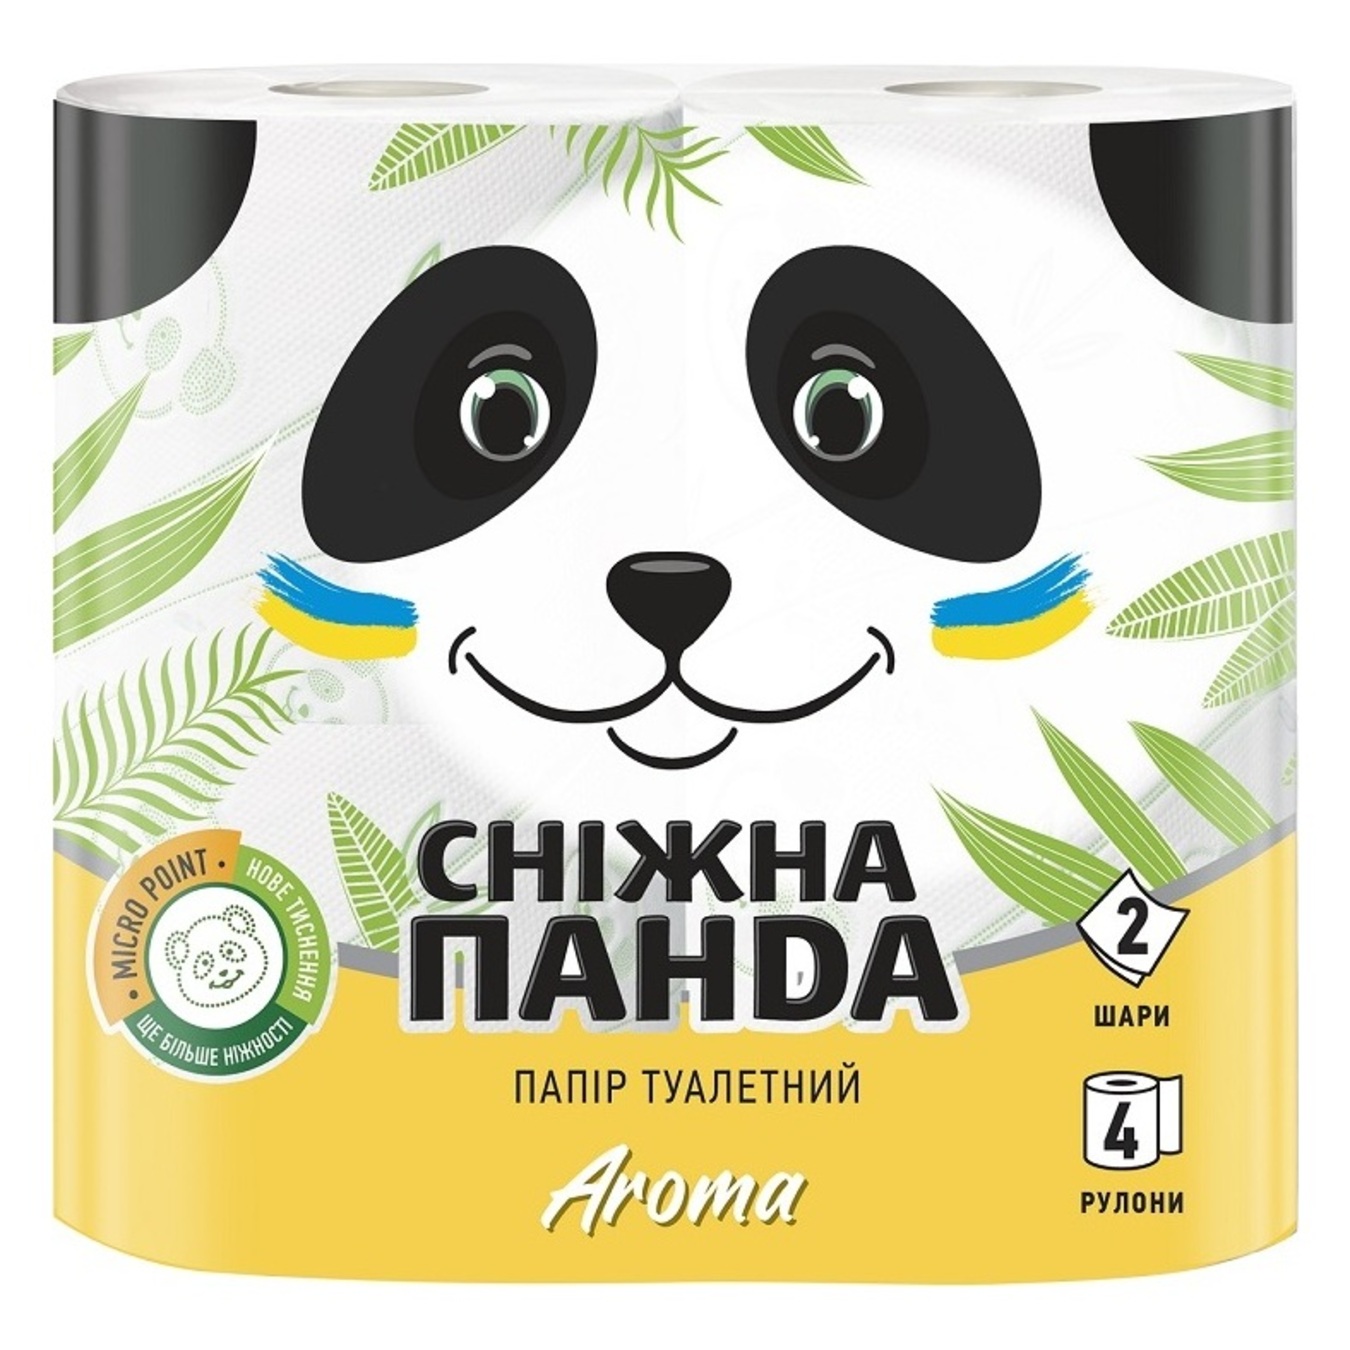 Snow Panda Aroma Toilet Paper 4pcs